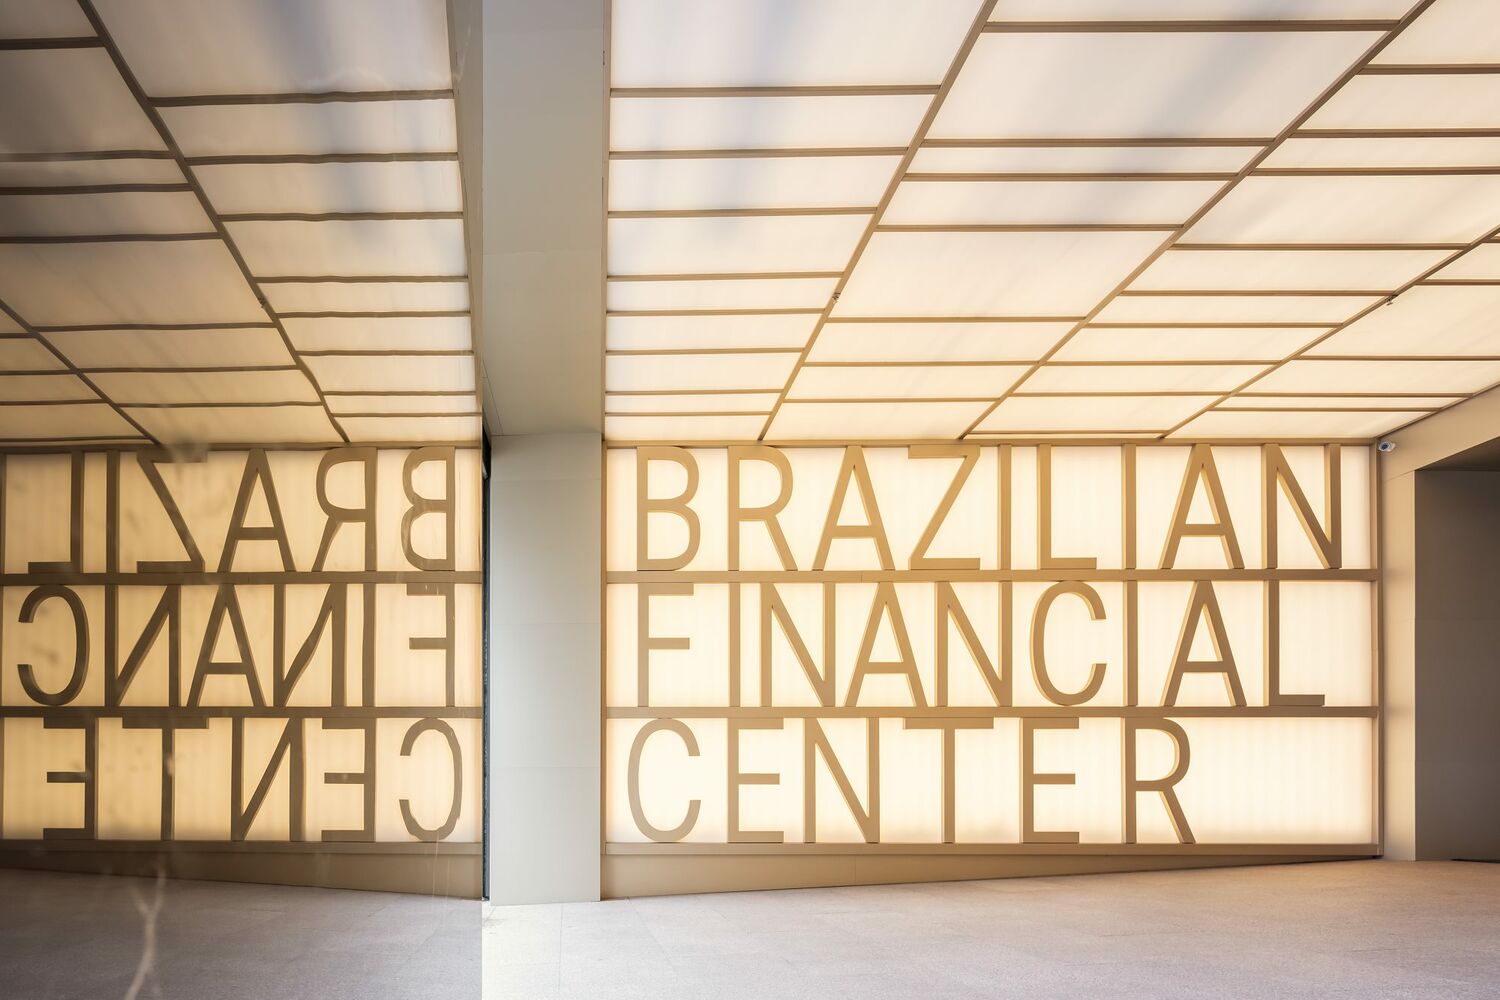 Brazilian Financial Center